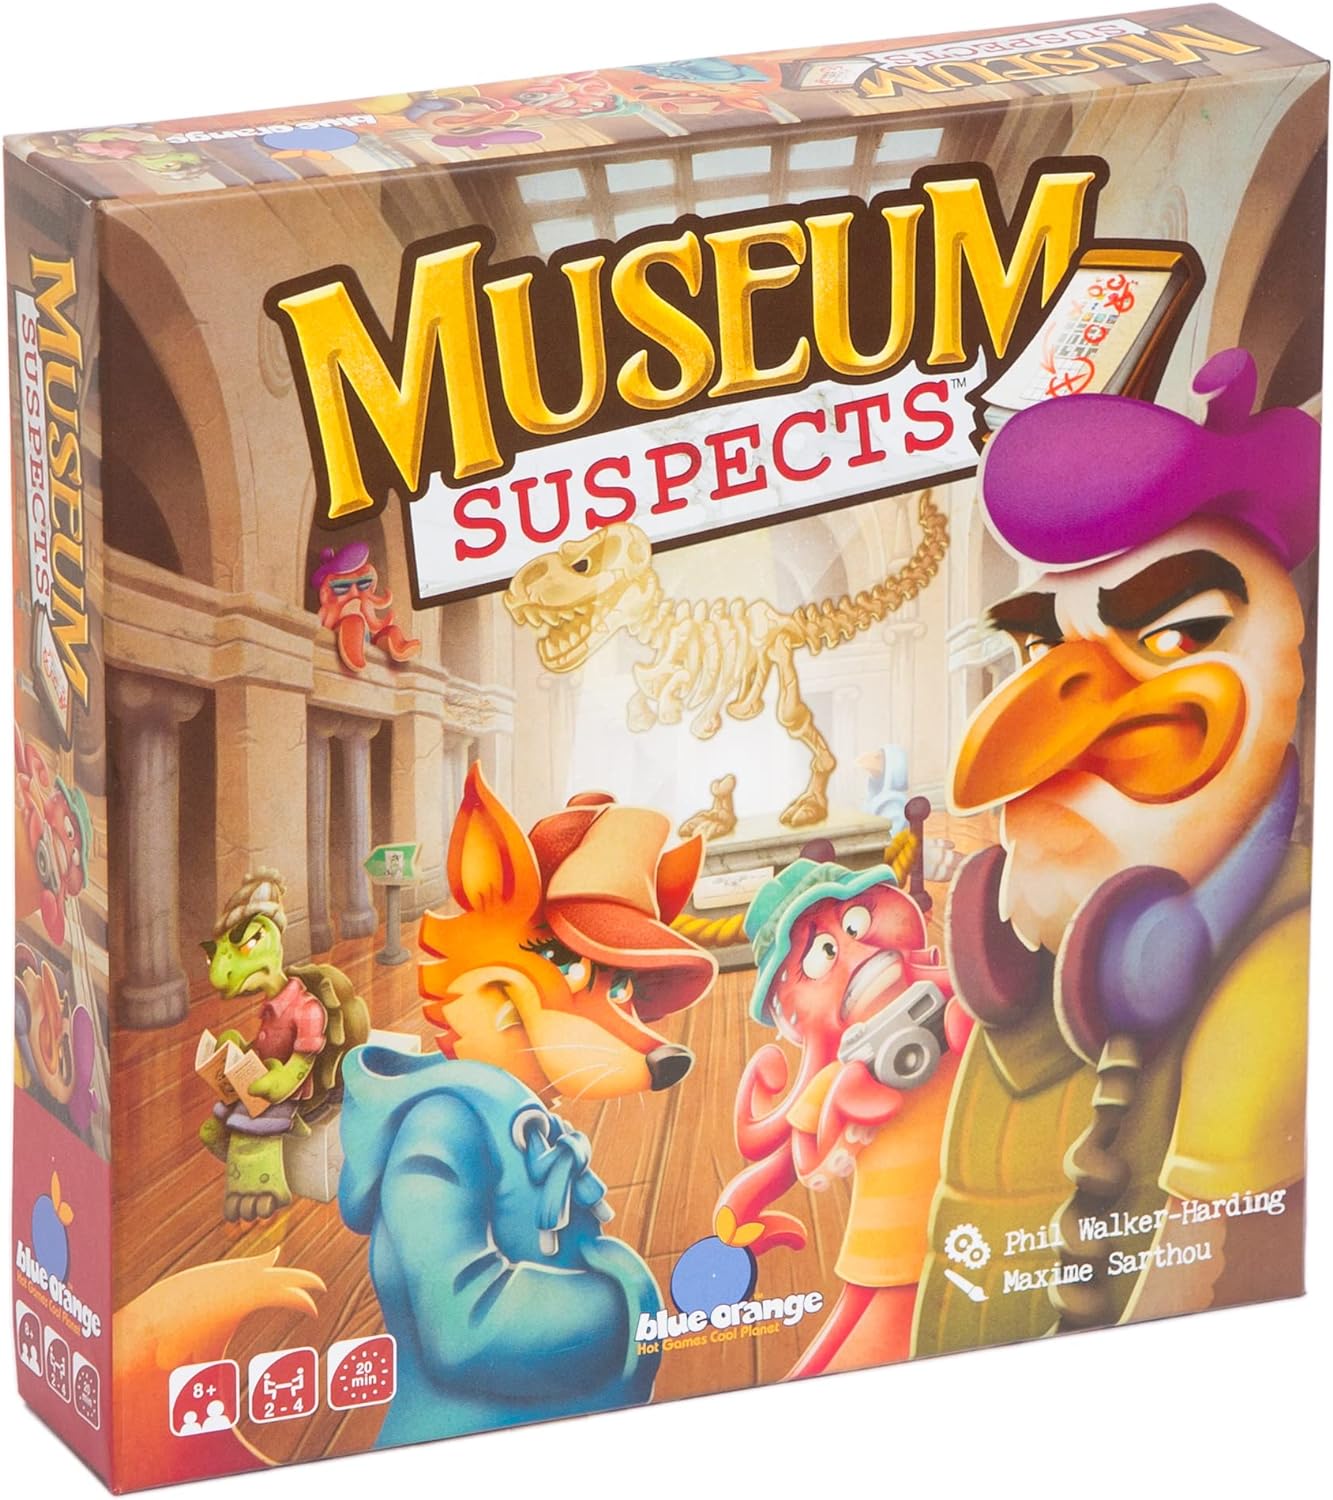 Museum suspects